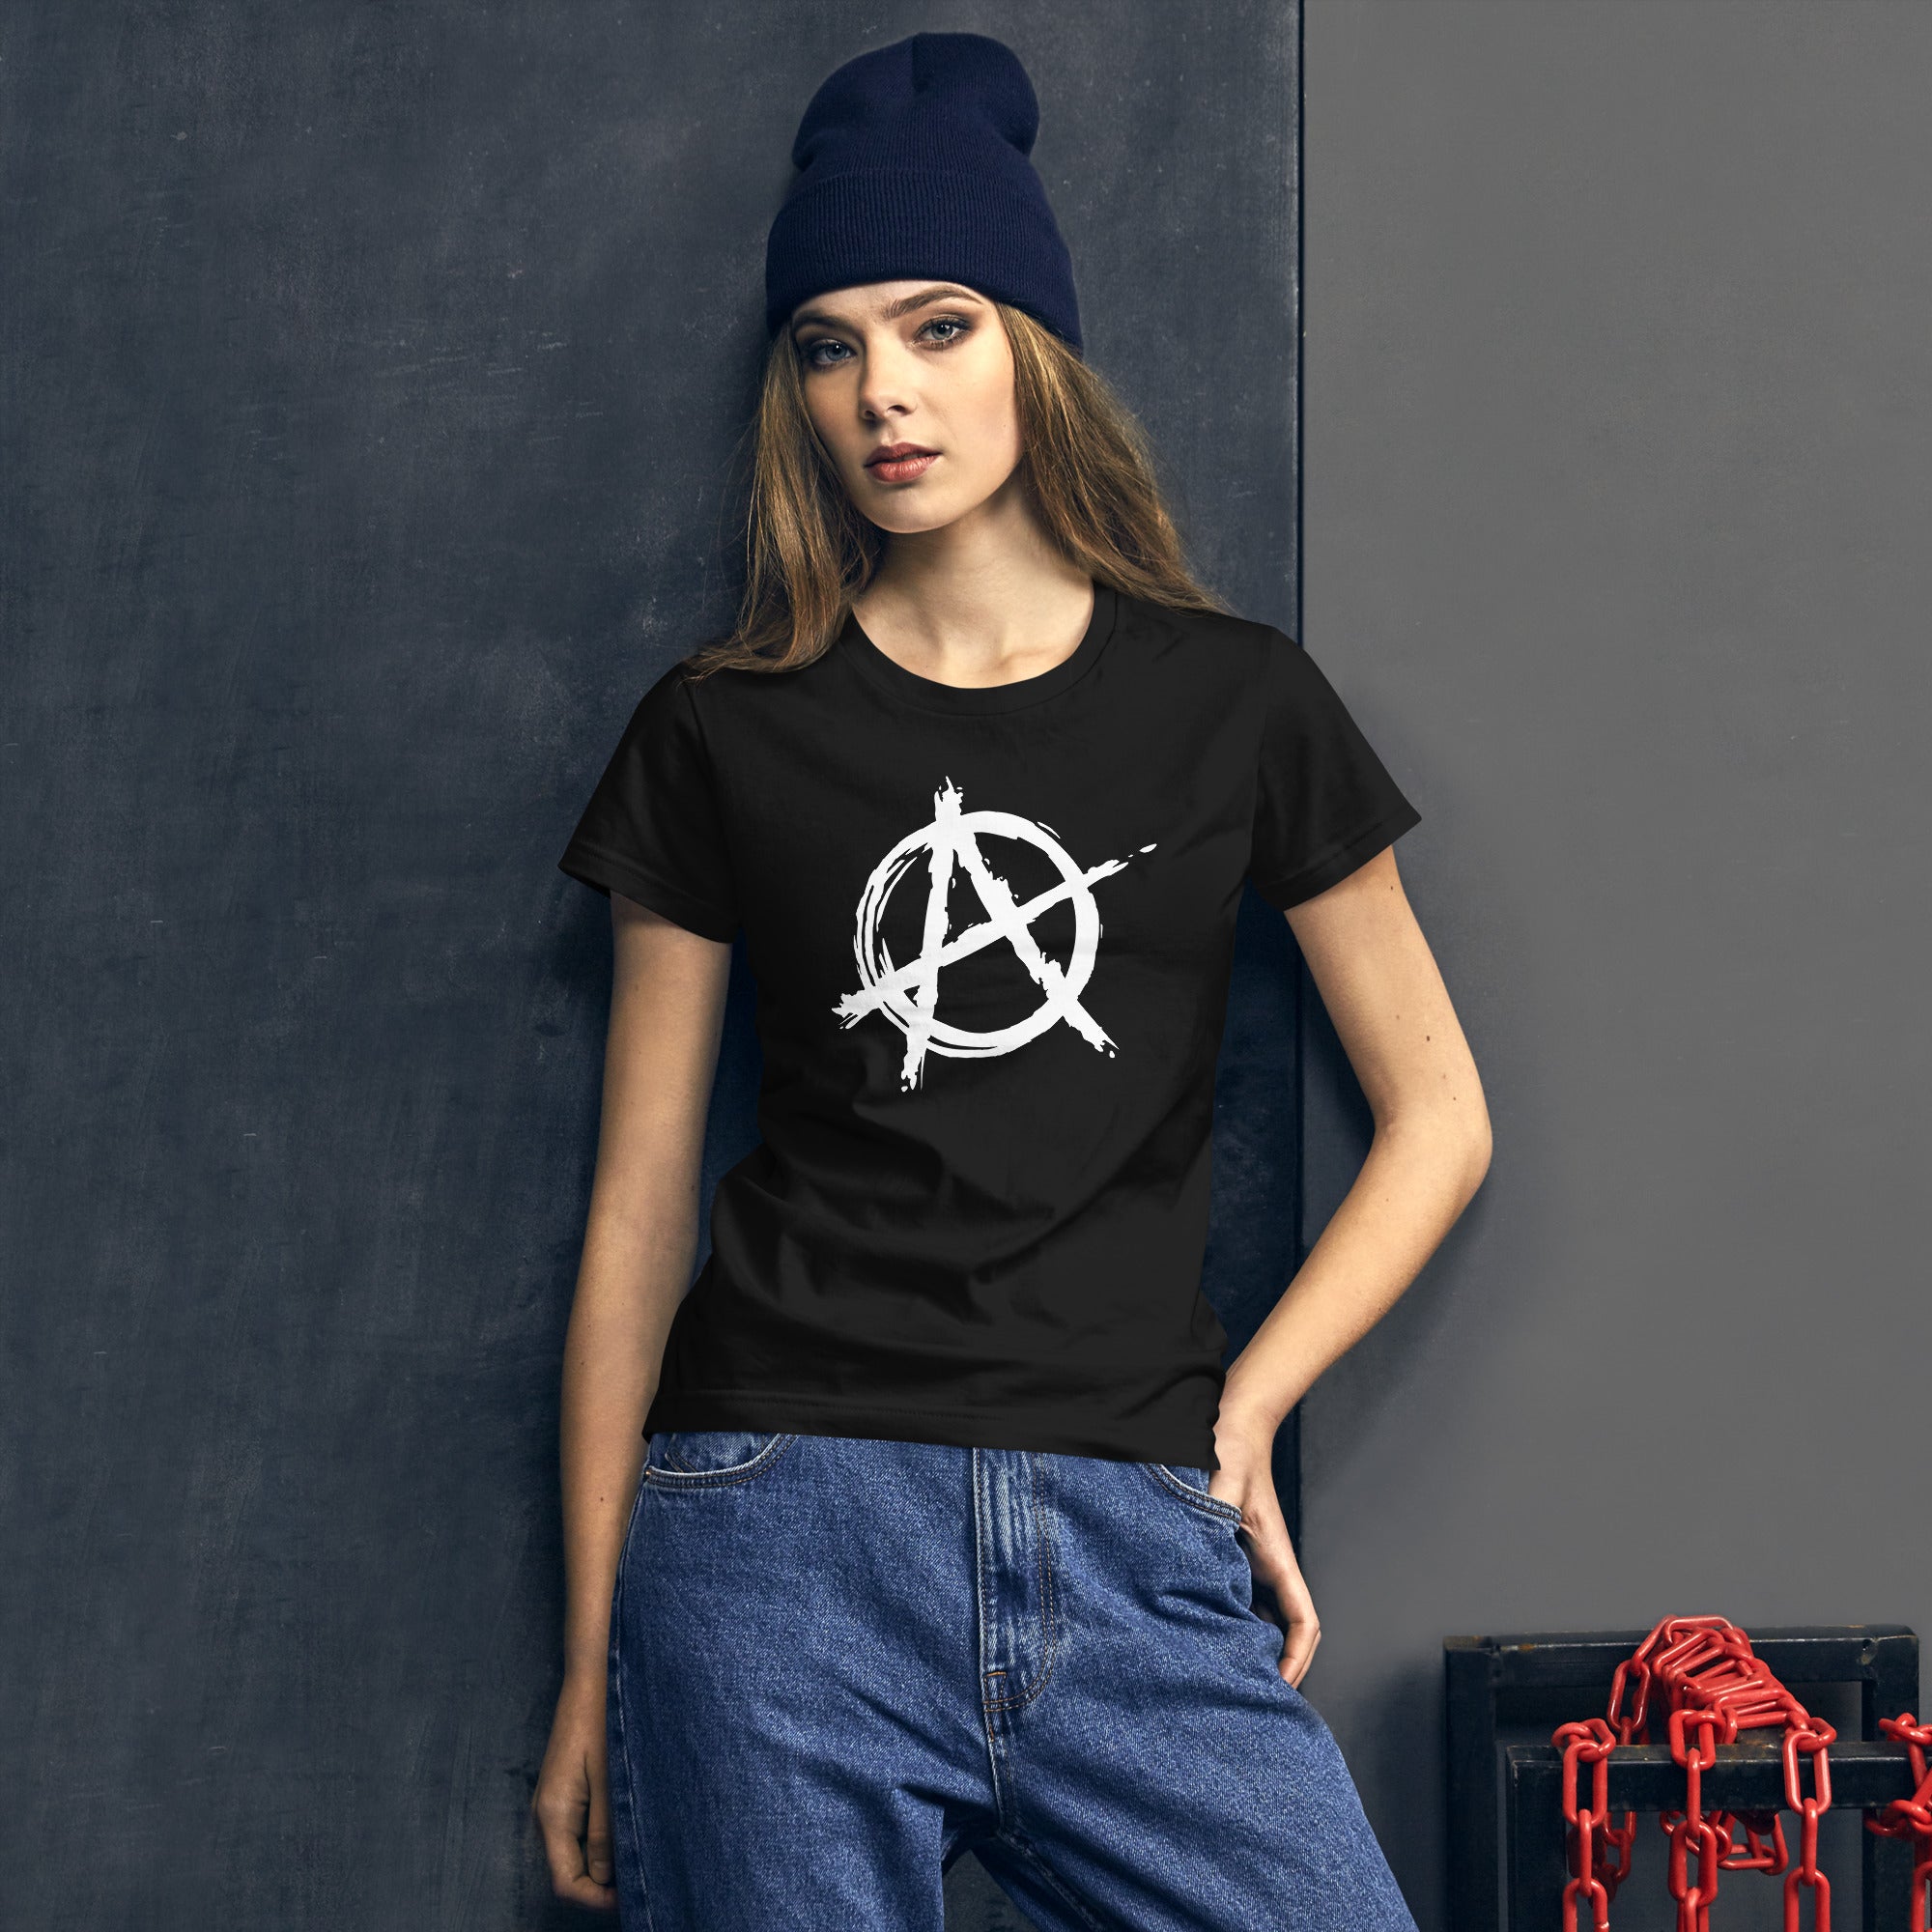 White Anarchy is Order Symbol Punk Rock Women's Short Sleeve Babydoll T-shirt